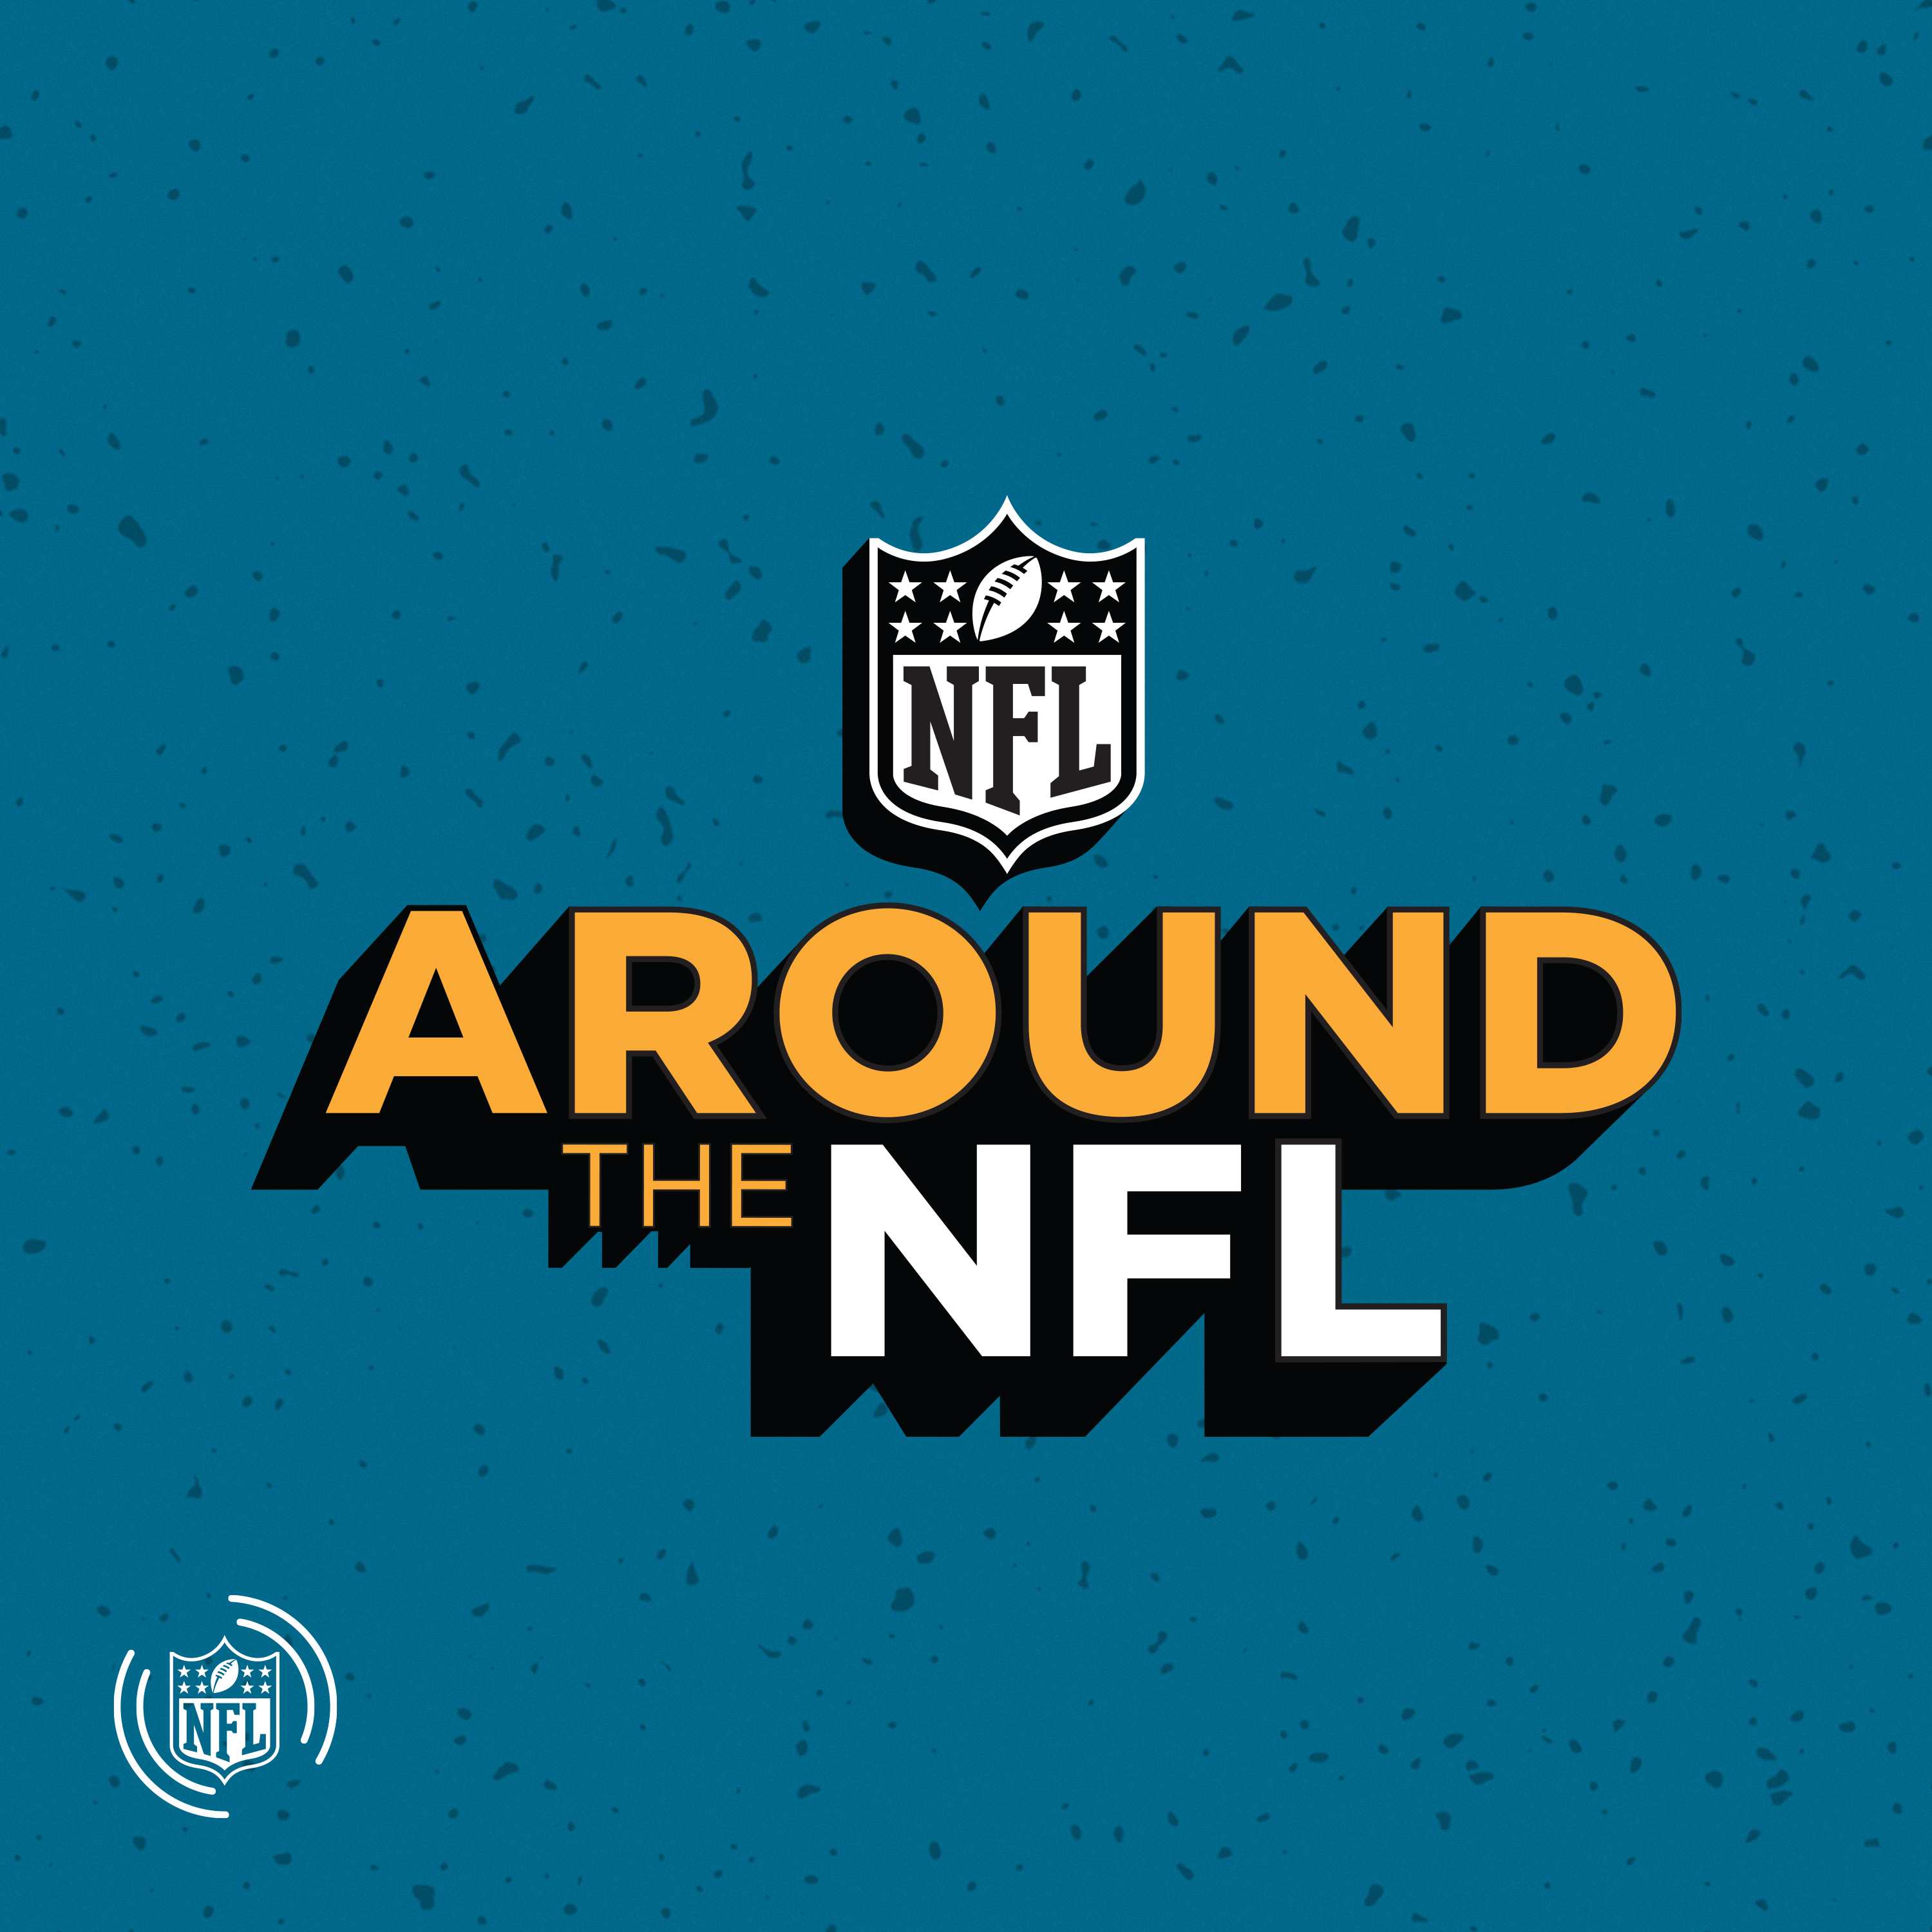 NFL ATL: Week 11 recap